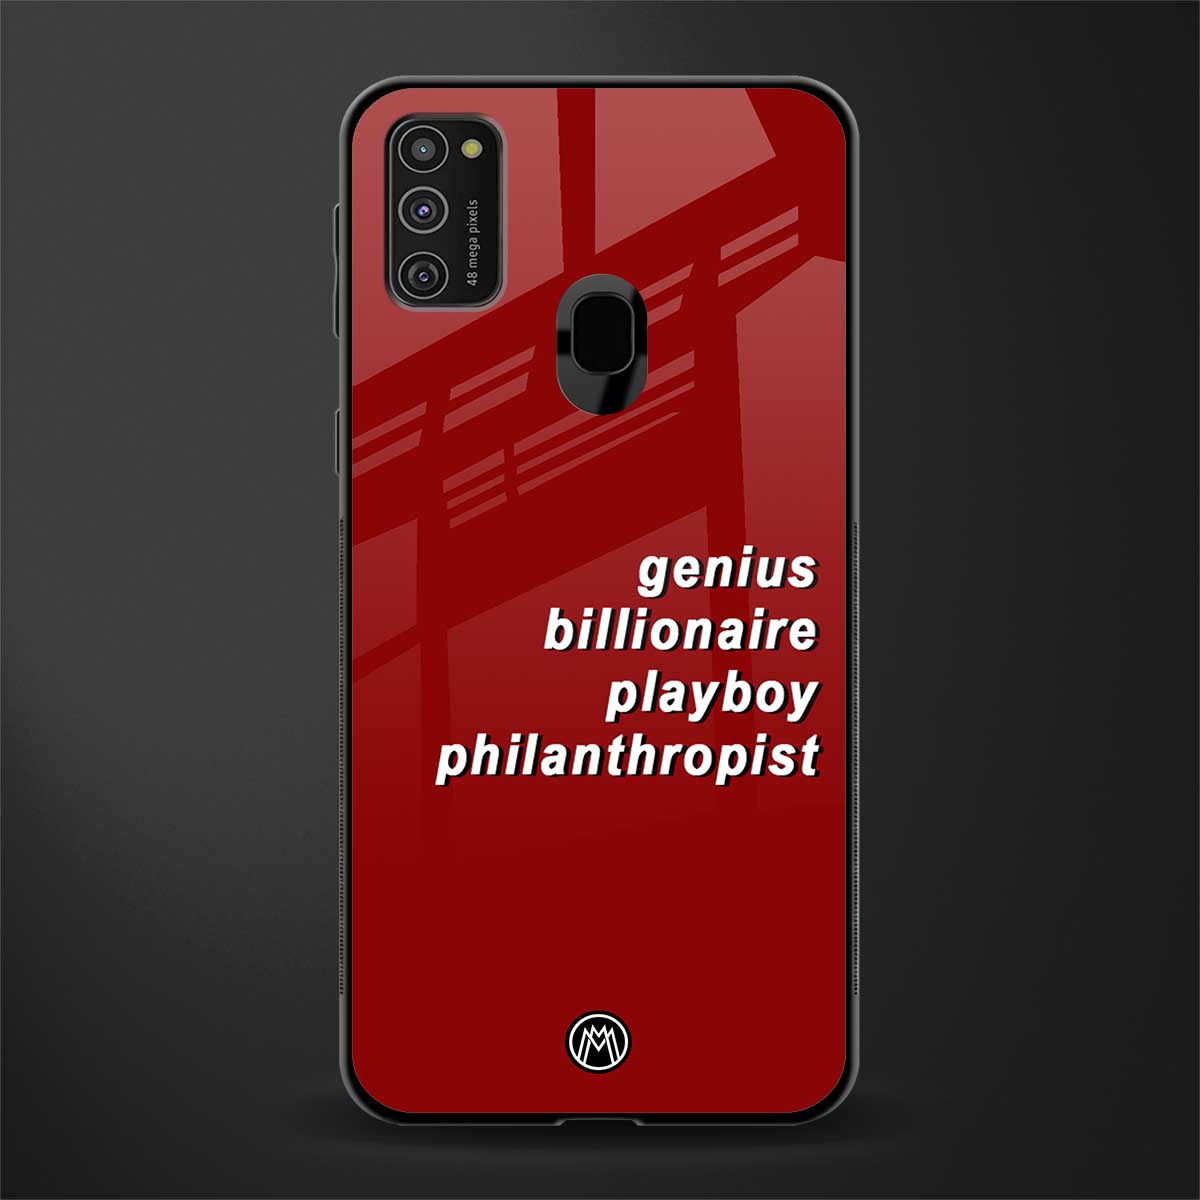 genius billionaire playboy philantrophist glass case for samsung galaxy m30s image